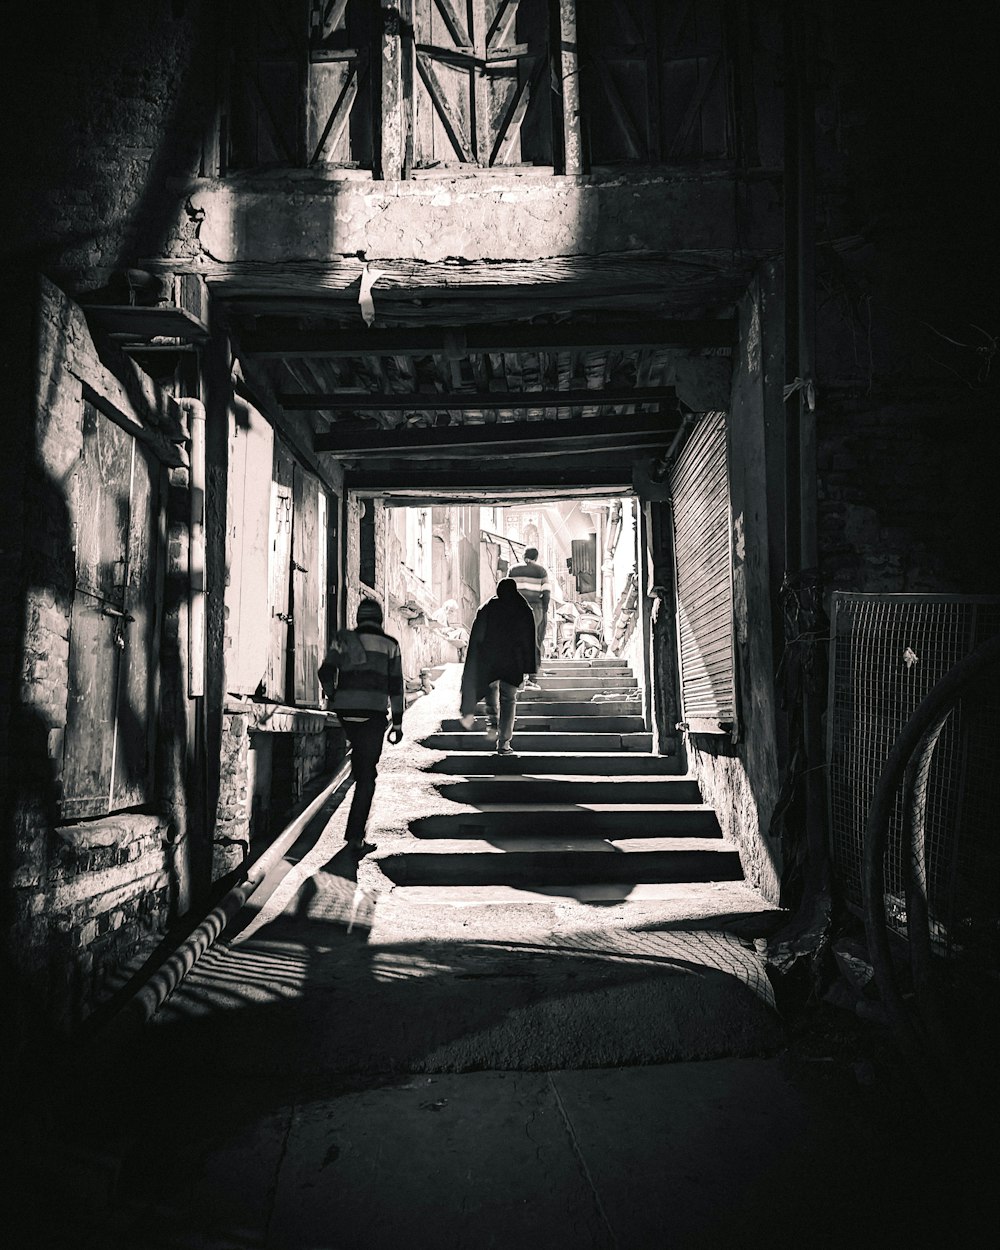 two people walking down a dark alley way